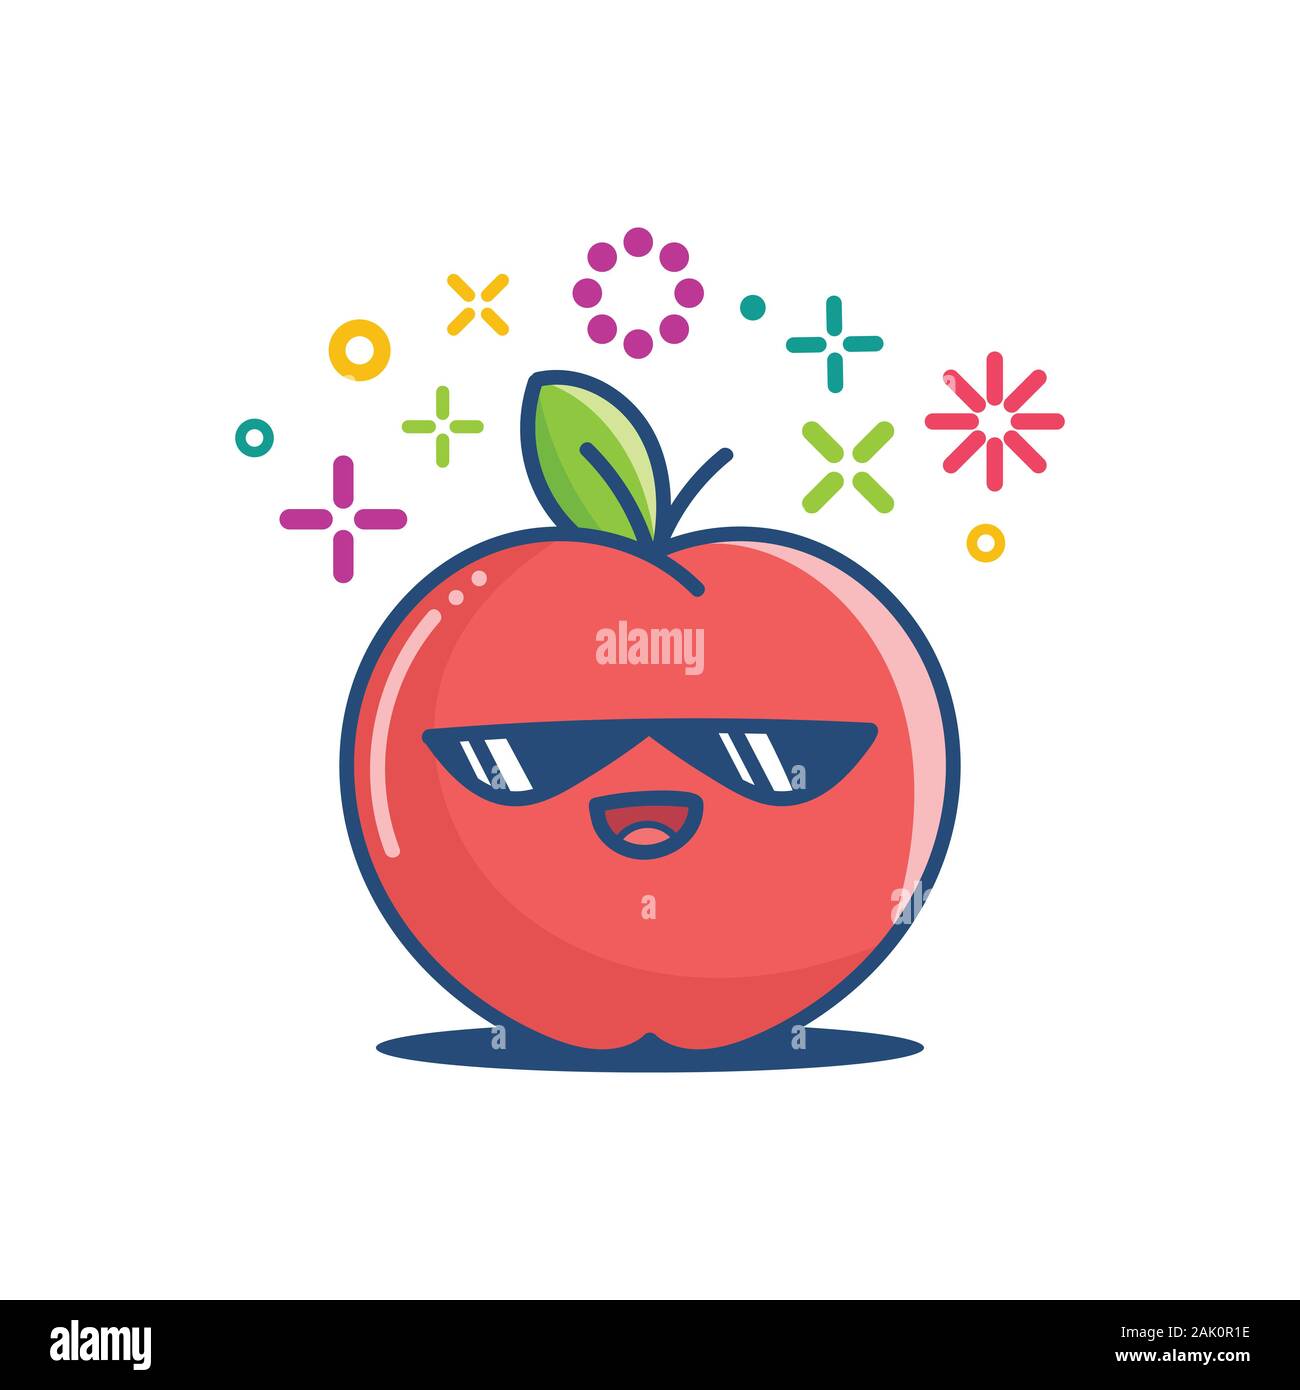 Apple, Clipart, Png, Kawaii, Fruit, Kawaii, Apple, Fruit, Cute, Comic  (Instant Download) 